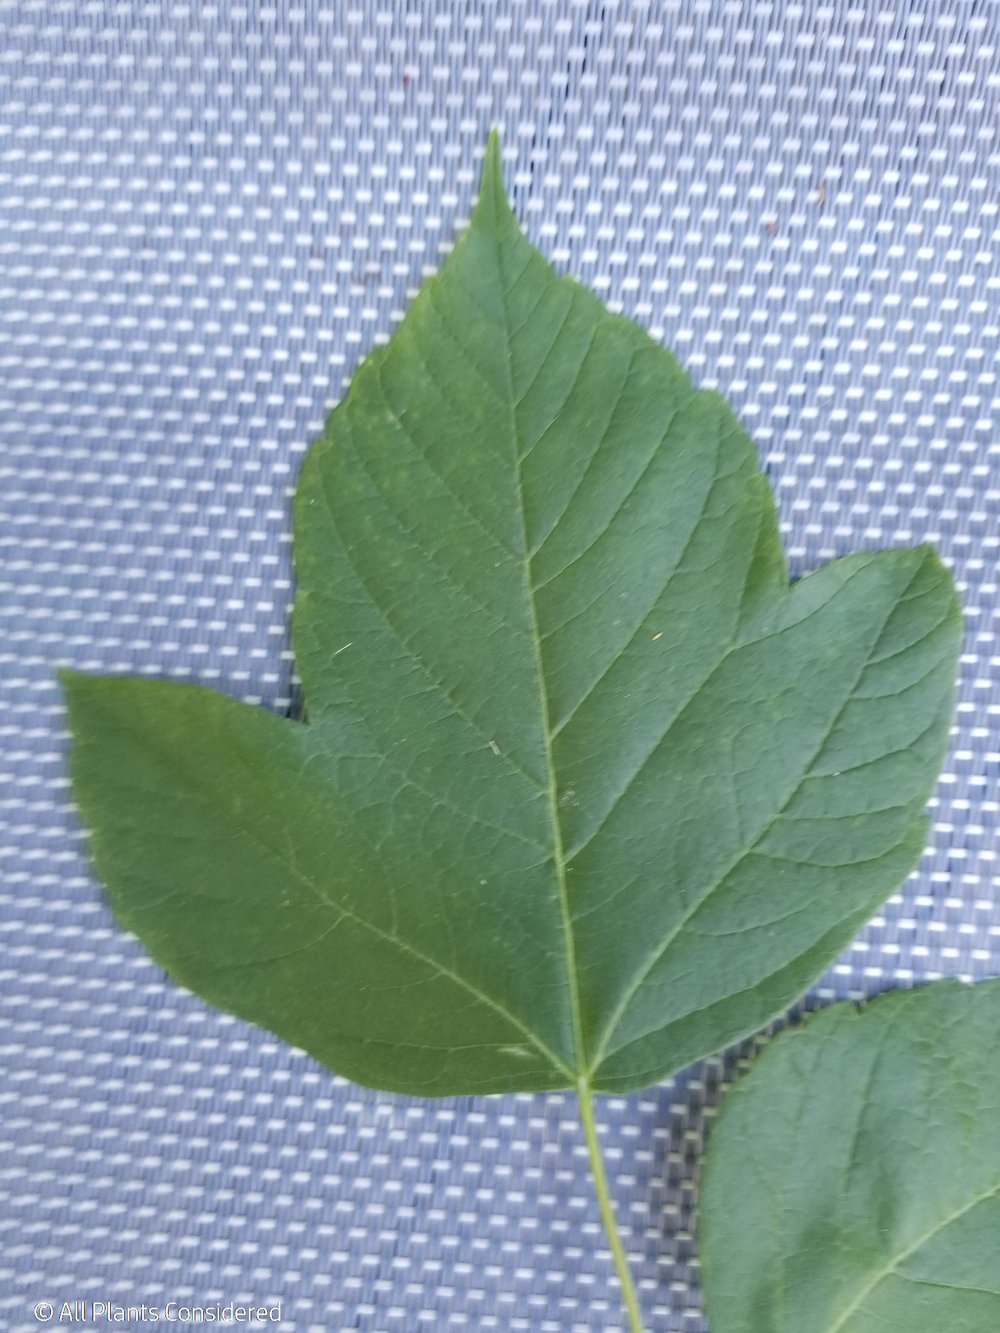 Box Elder Leaf Morphology 2.jpg